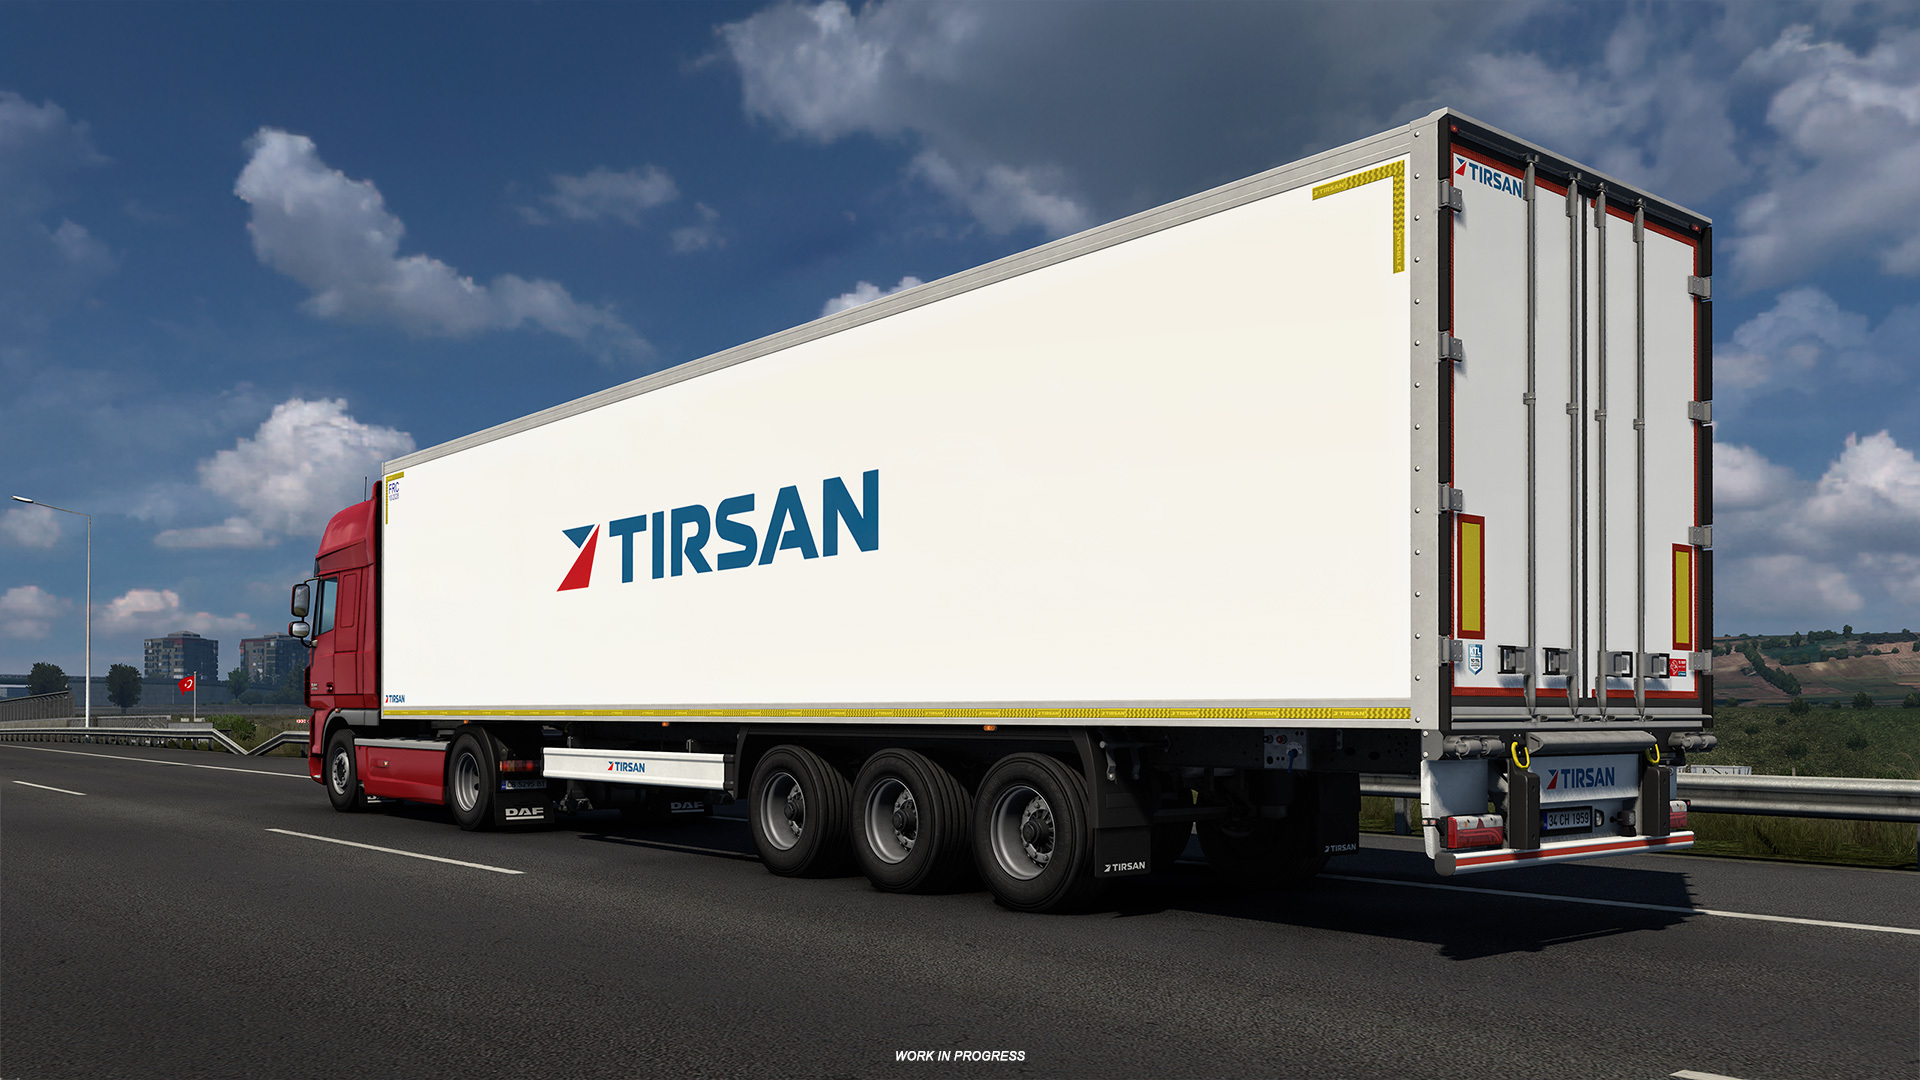 Euro Truck Simulator 2 - West Balkans Video Trailer 